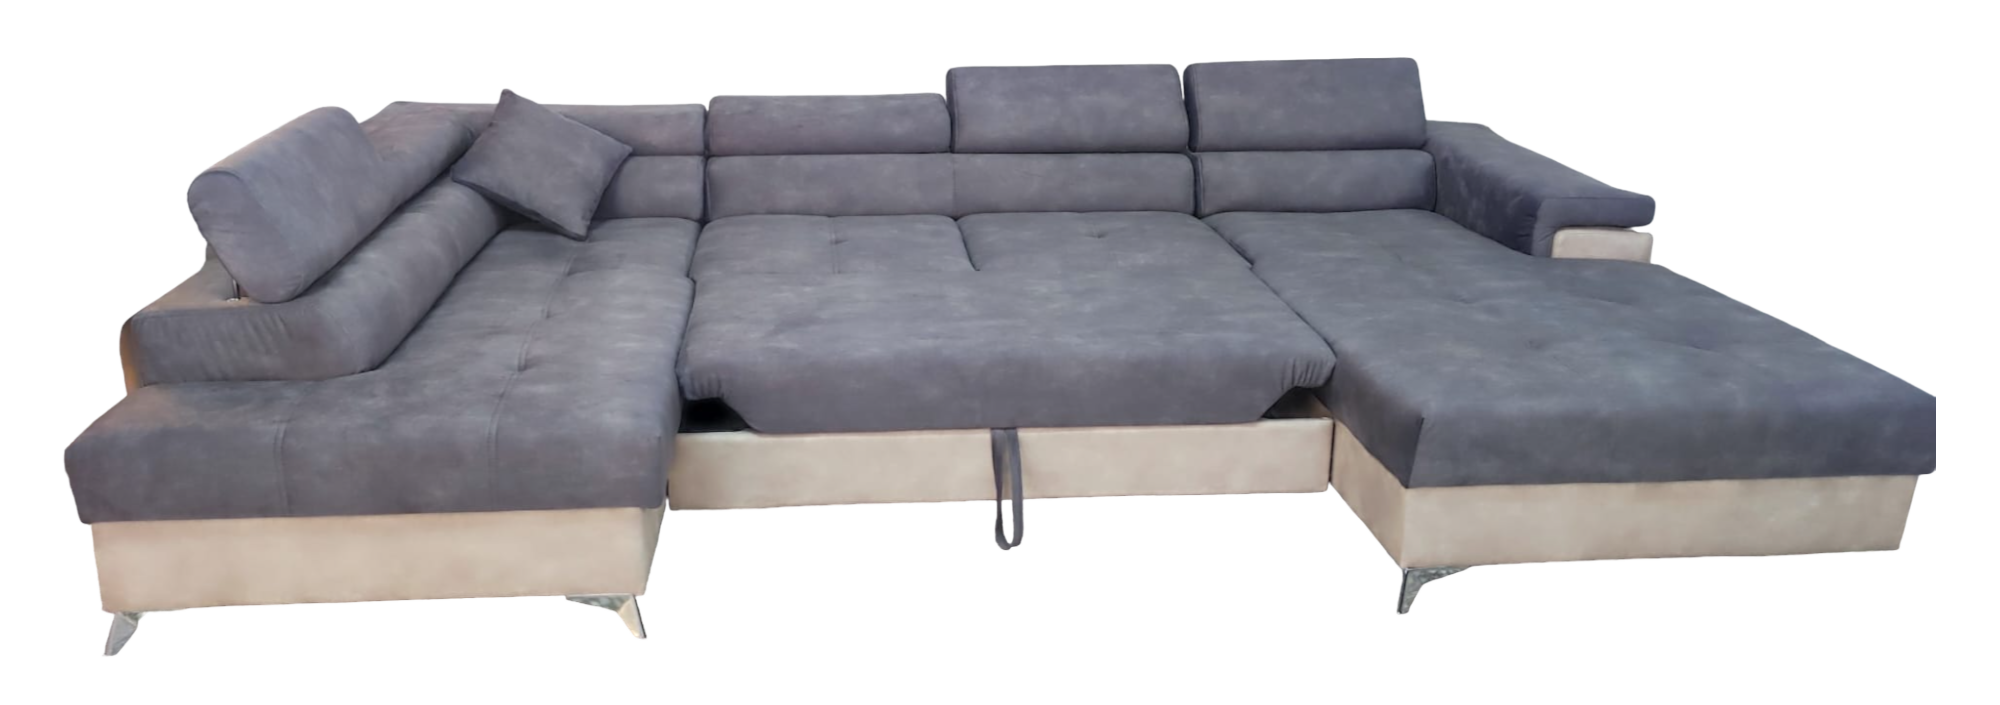 Sofá cama en forma de U - Eduardo COLOR GRIS OSCURO/BEIGE